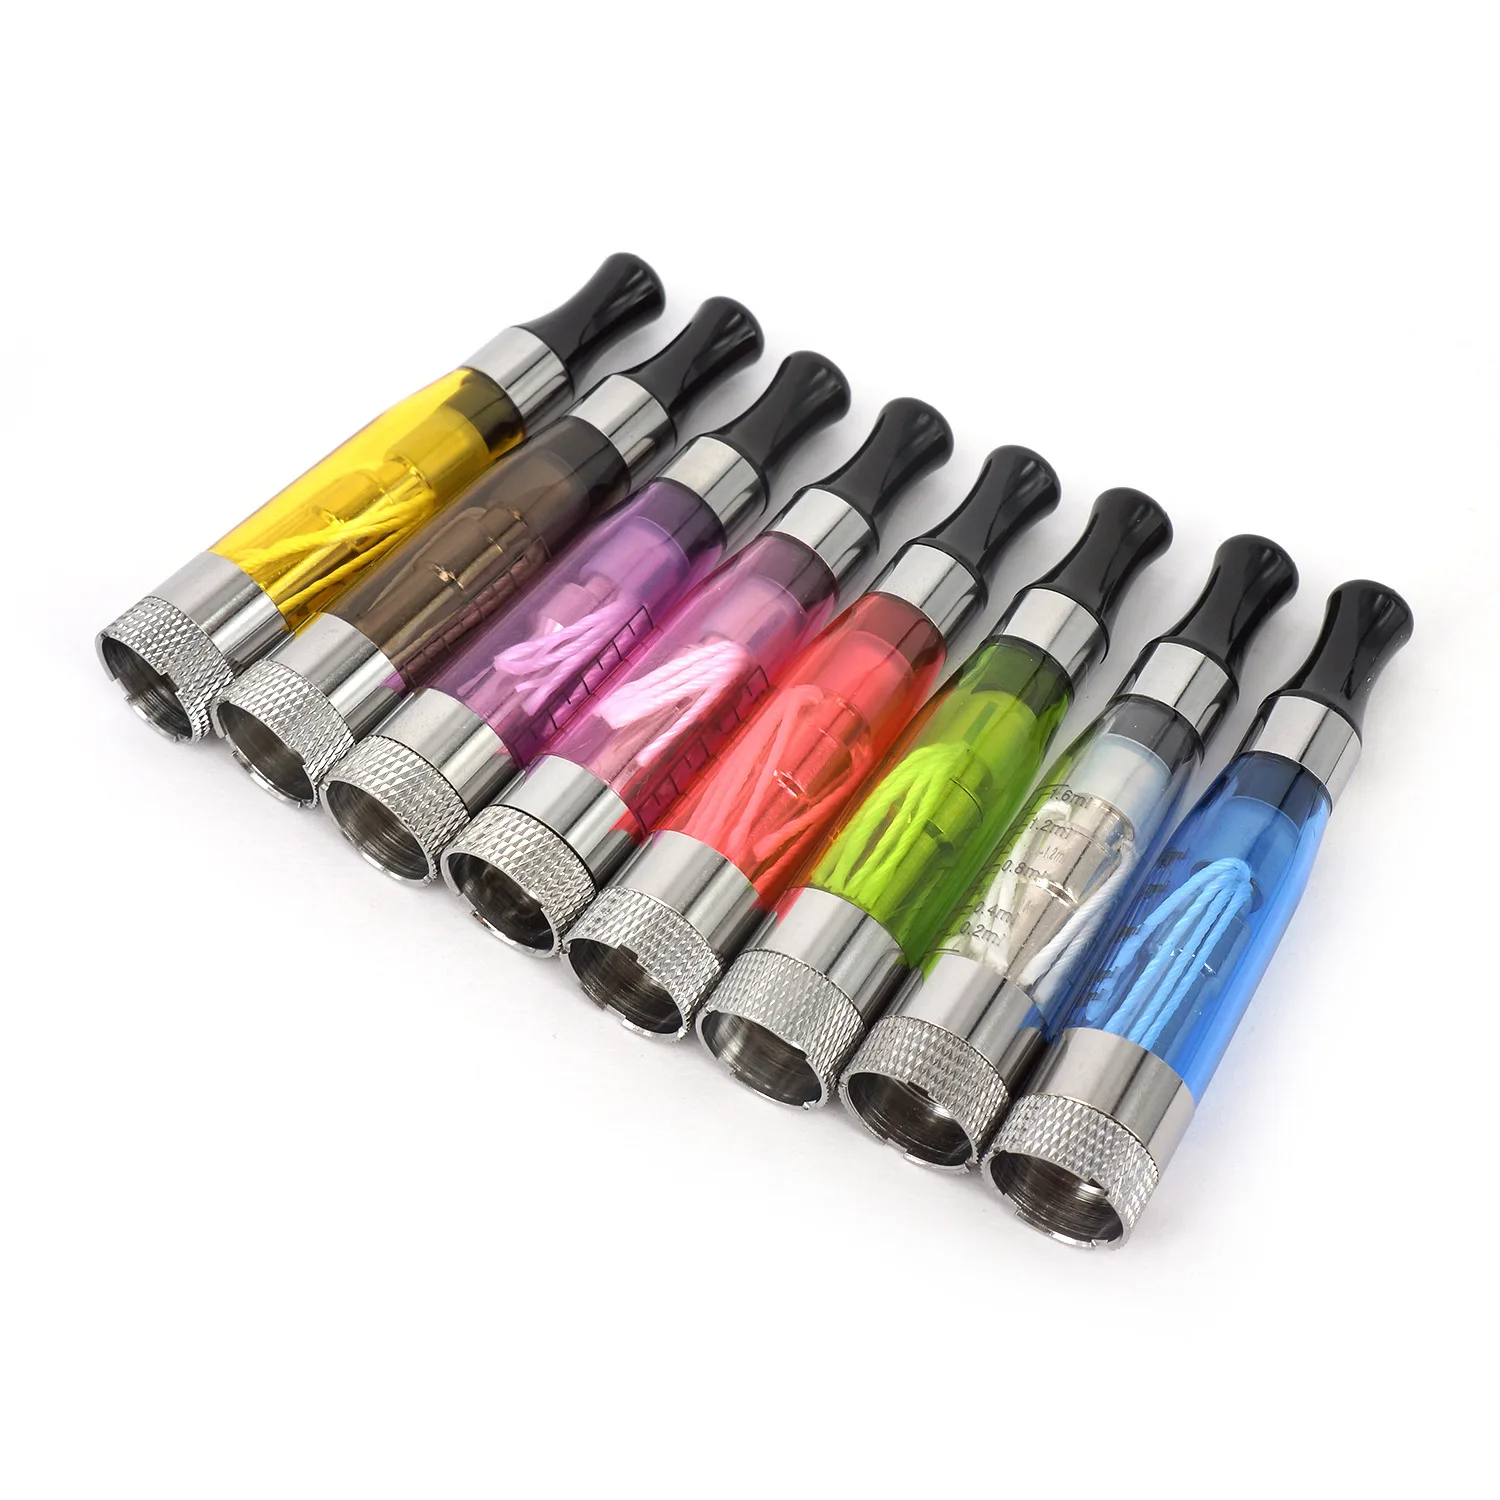 

RDA RTA DIY CE4+ Atomizer Clearomizer for Ego Ego-t Evod Pen 510 Thread Electronic E-Cigarette Ecigs 1.6ml Vape Cartridge